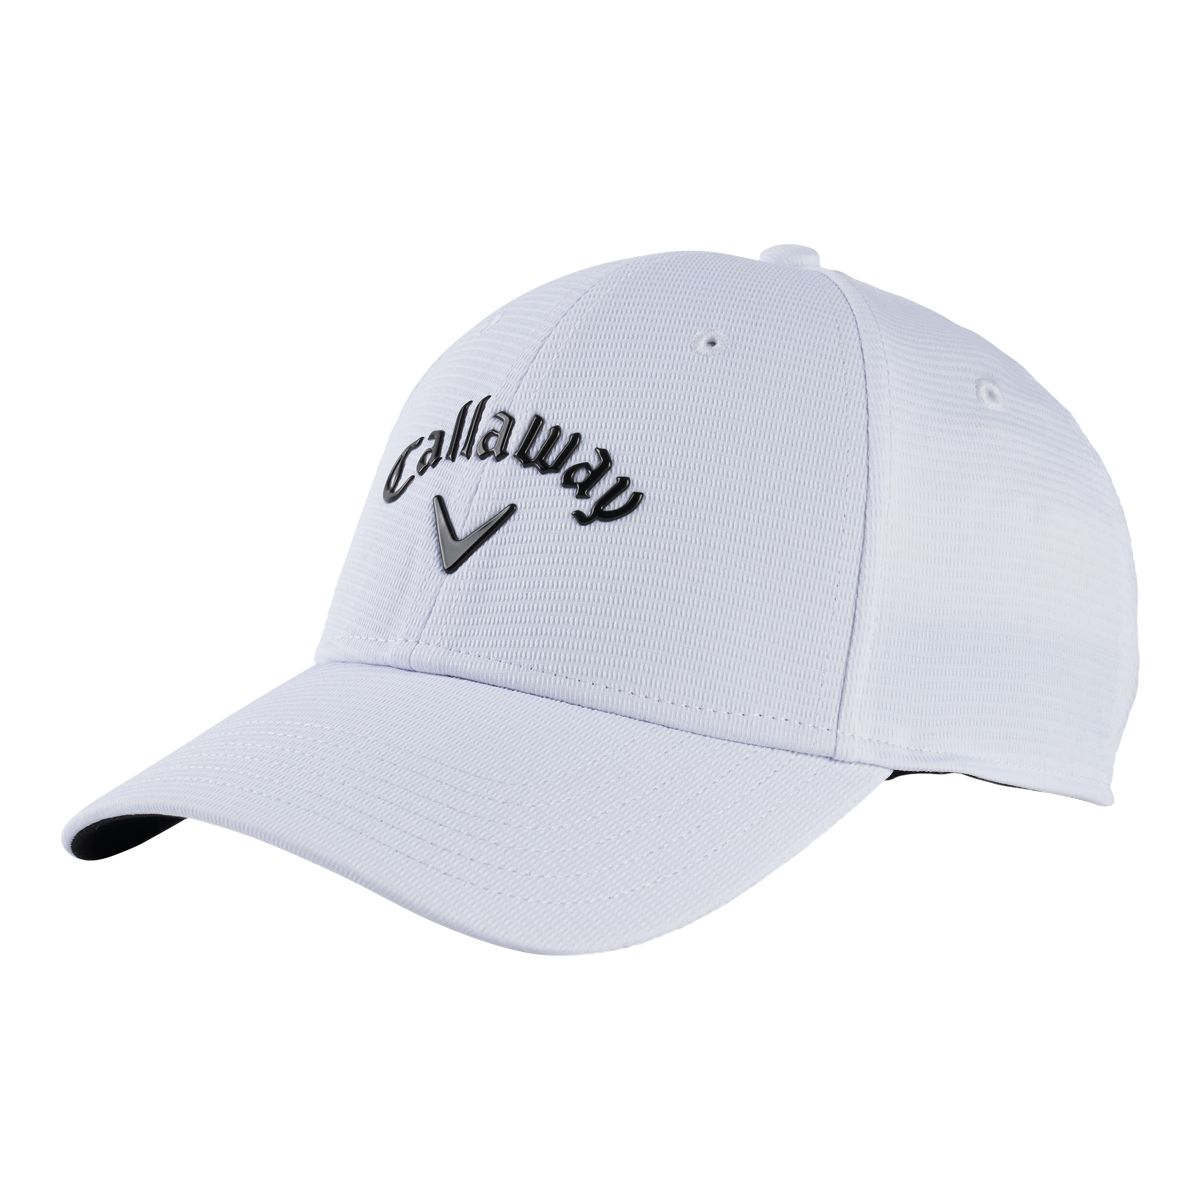 Image of Callaway Men's Liquid Metal Golf Cap